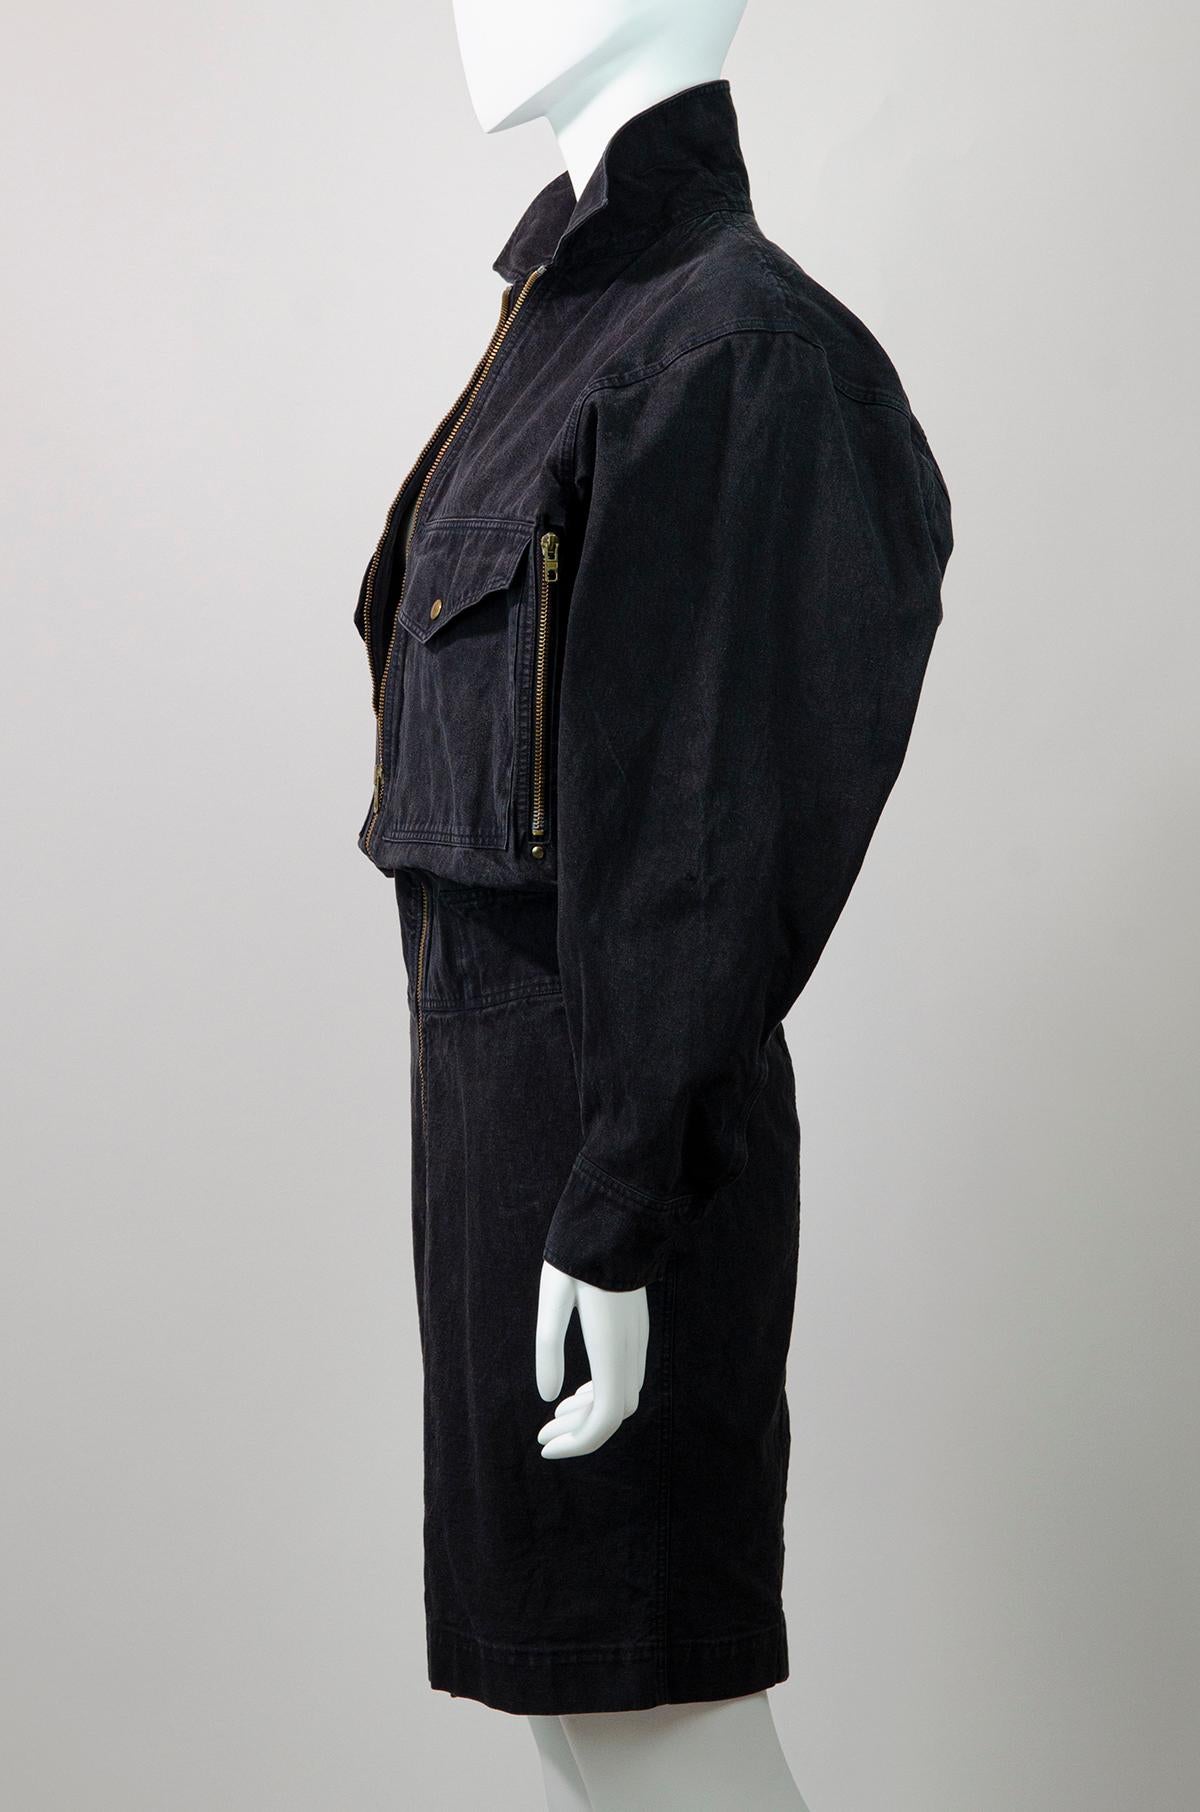 ALAÏA S/S 1986 Vintage Runway Denim Zipper Dress With Pockets 3